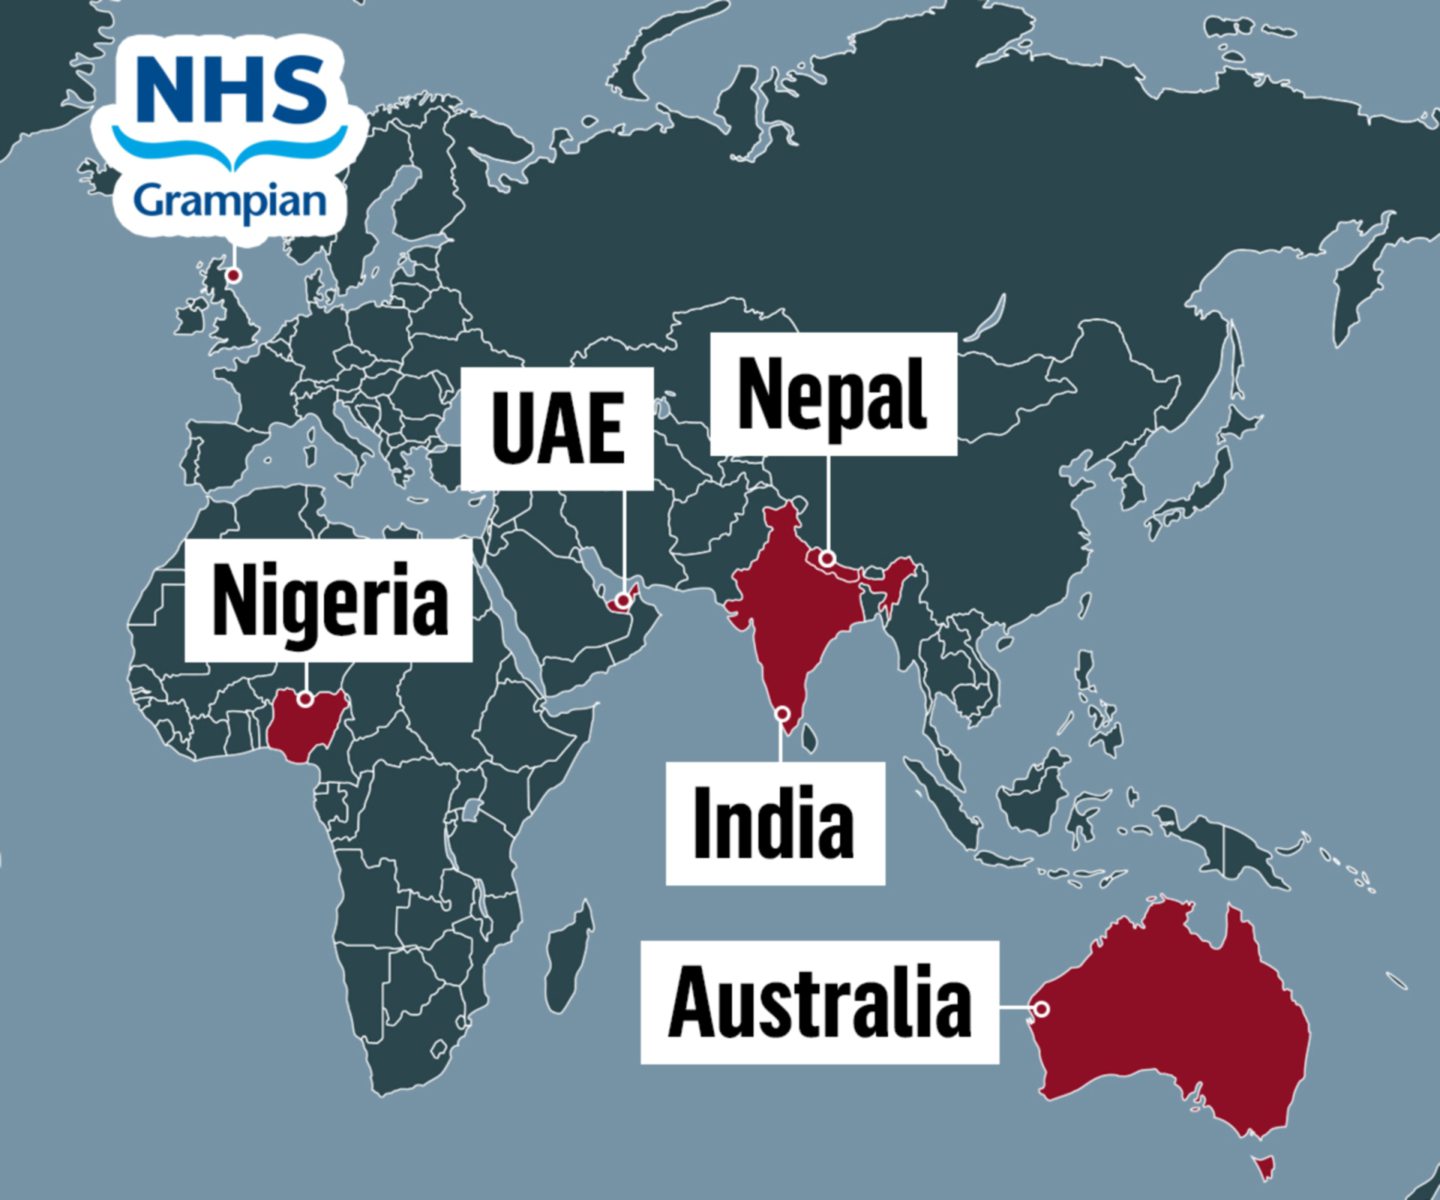 A map showing where NHS Grampian has recruited internationally - UAE, Nigeria, Nepal, India and Australia